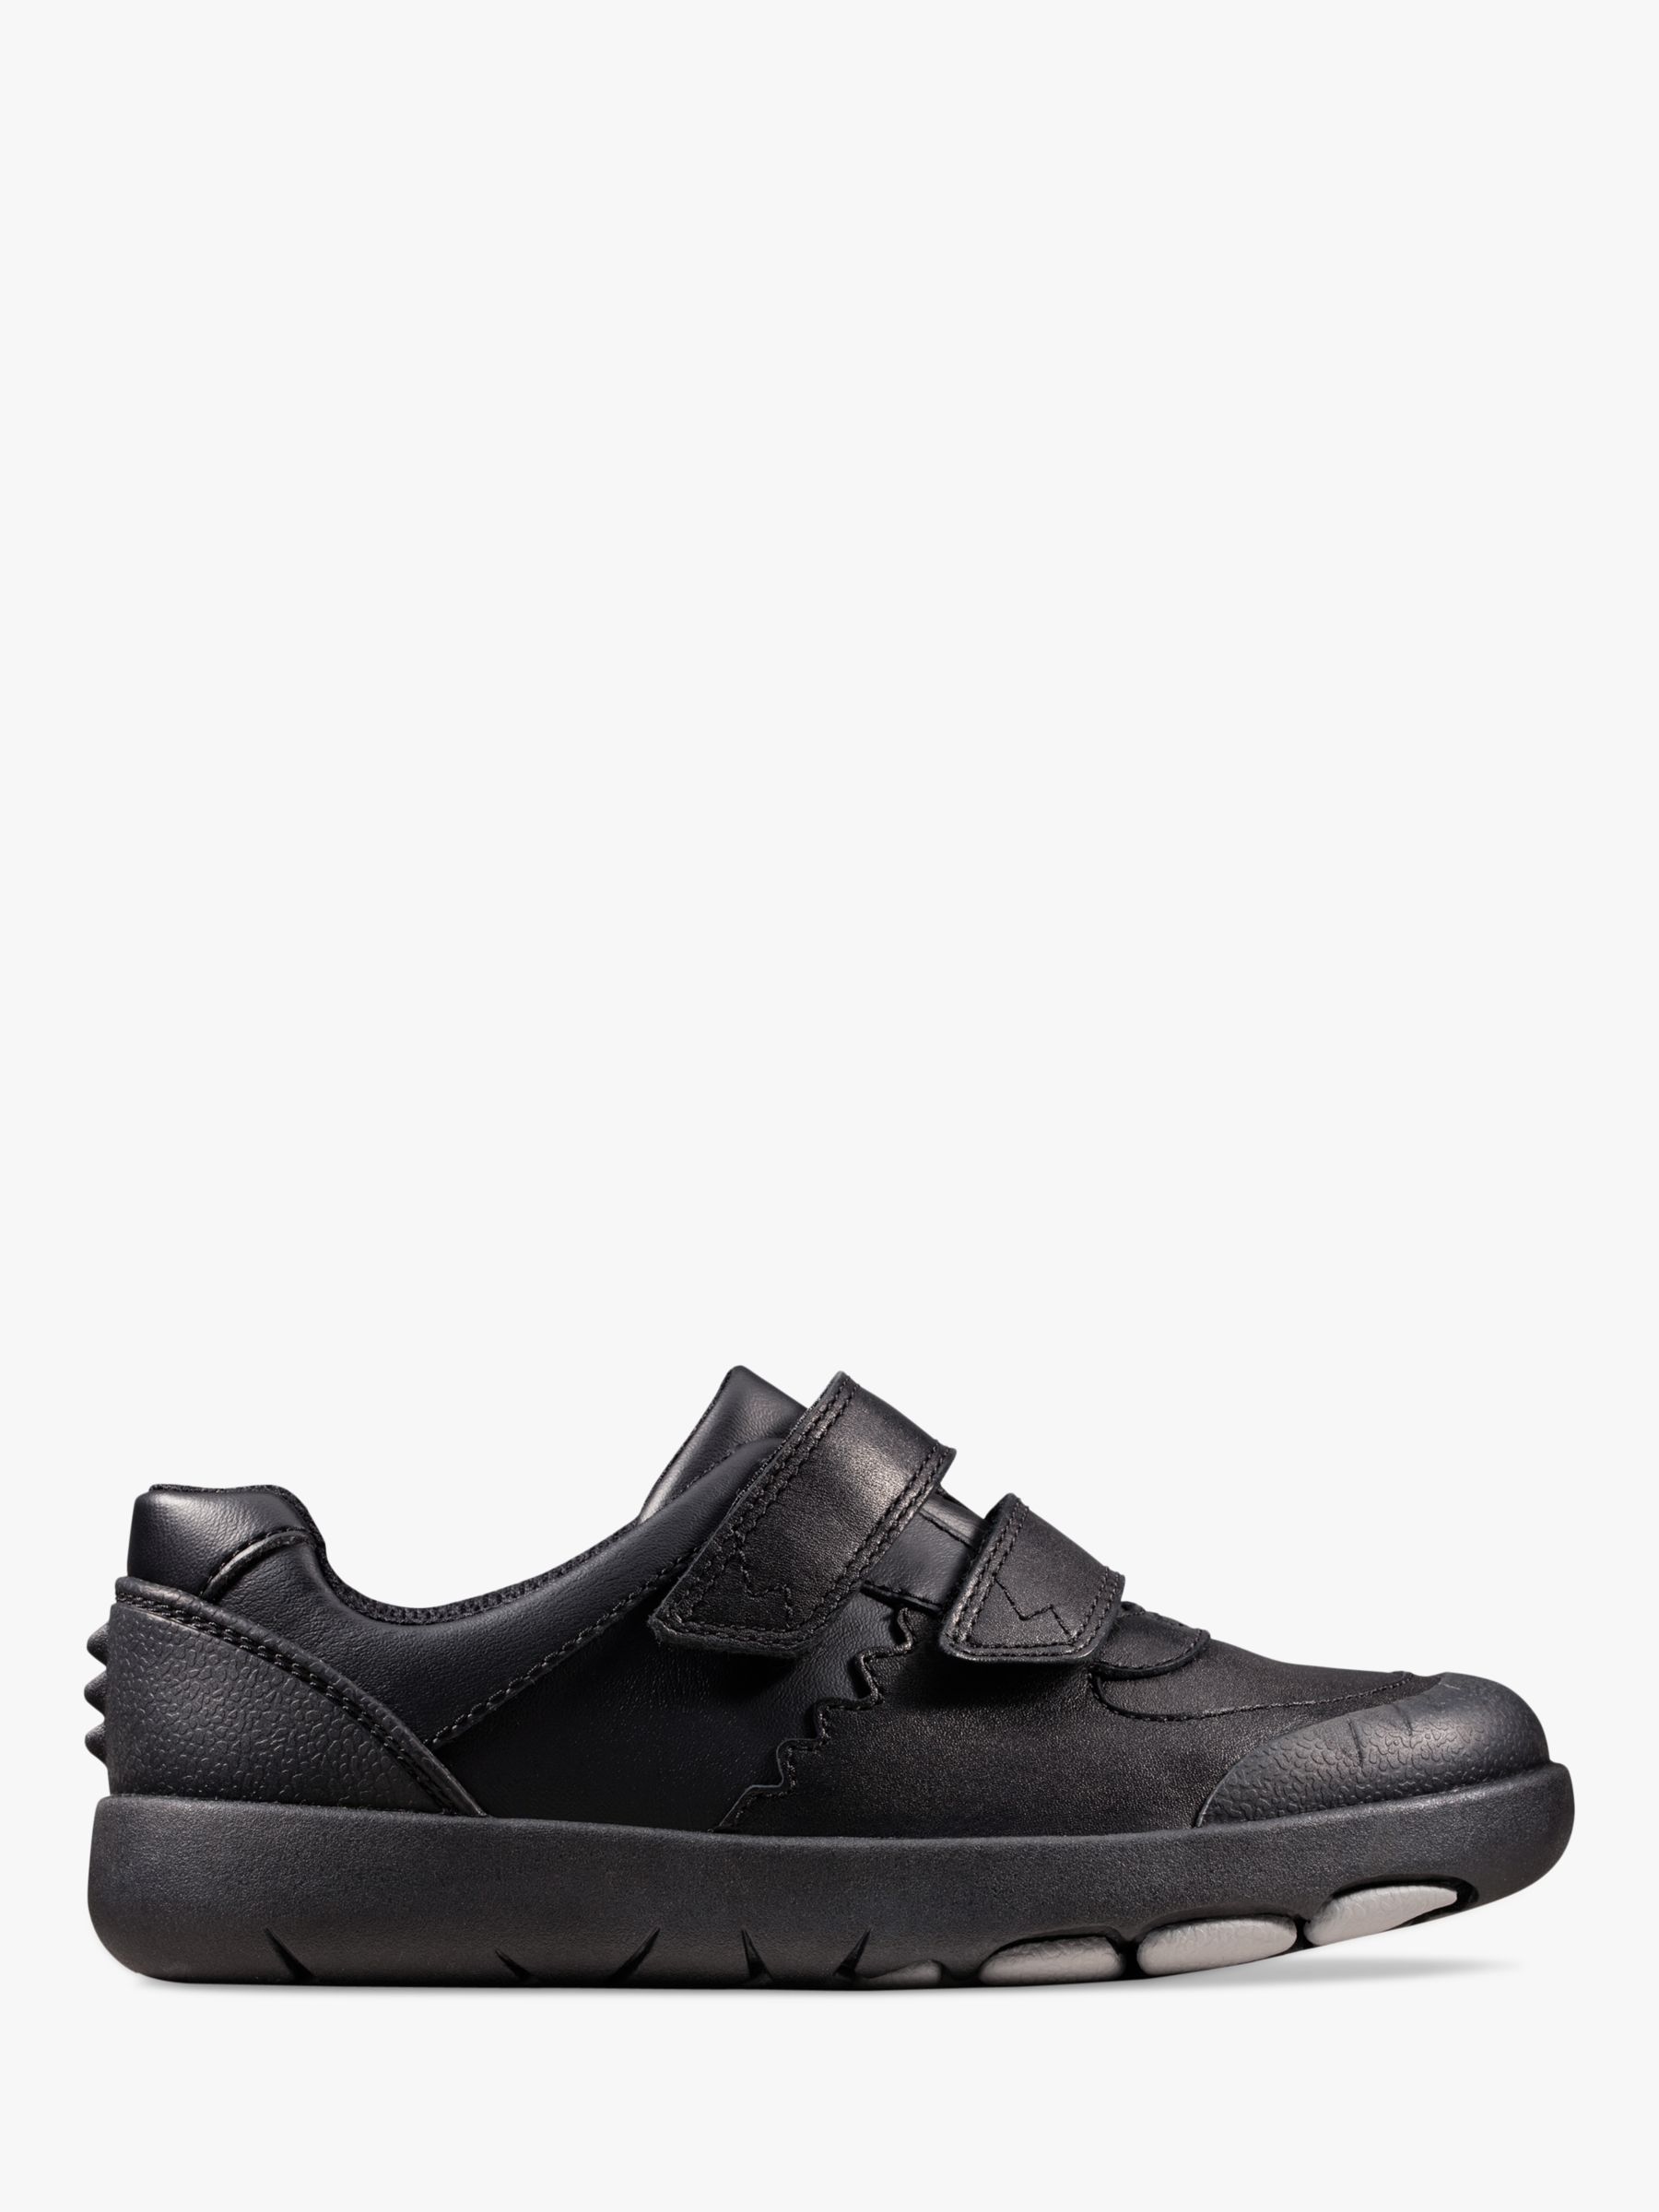 Rex Pace Leather Shoes, Black 